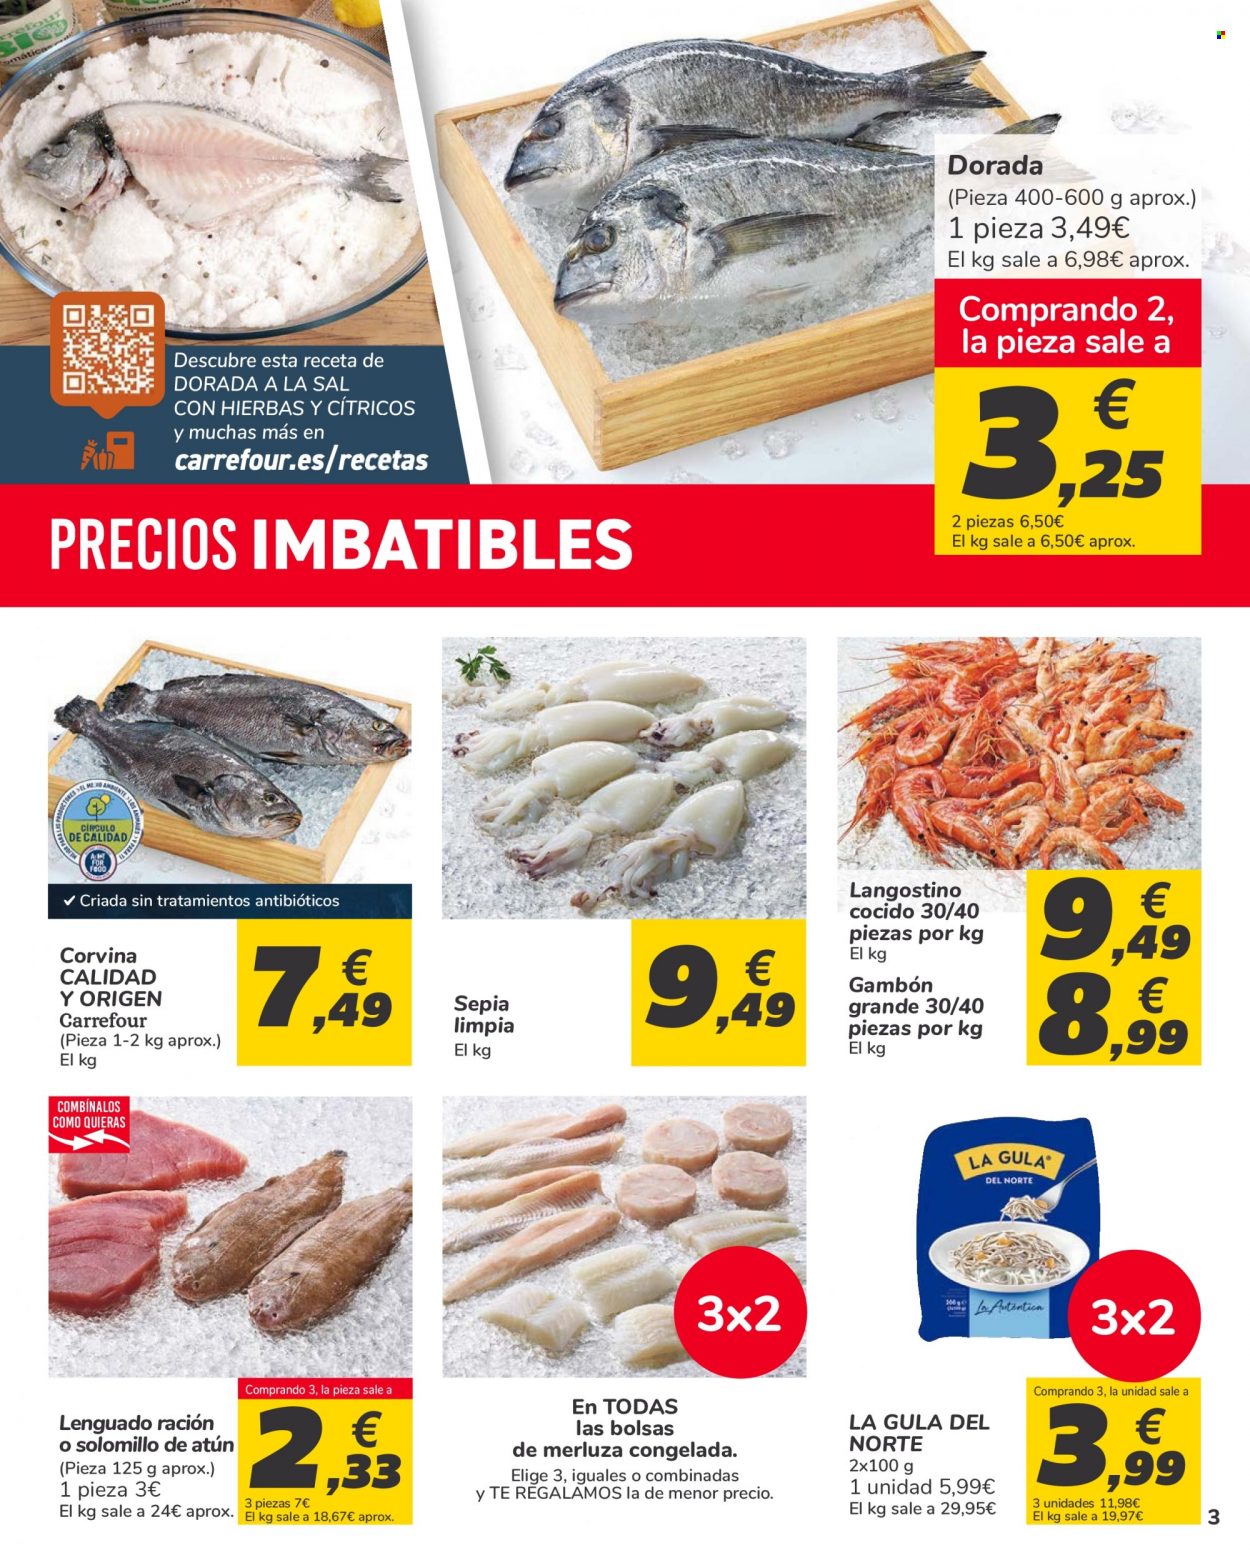 thumbnail - Folleto actual Carrefour - 02/01/22 - 17/01/22 - Ventas - solomillo, merluza, dorada pescado, gambón, langostino, solomillo de atún, La Gula del Norte. Página 3.